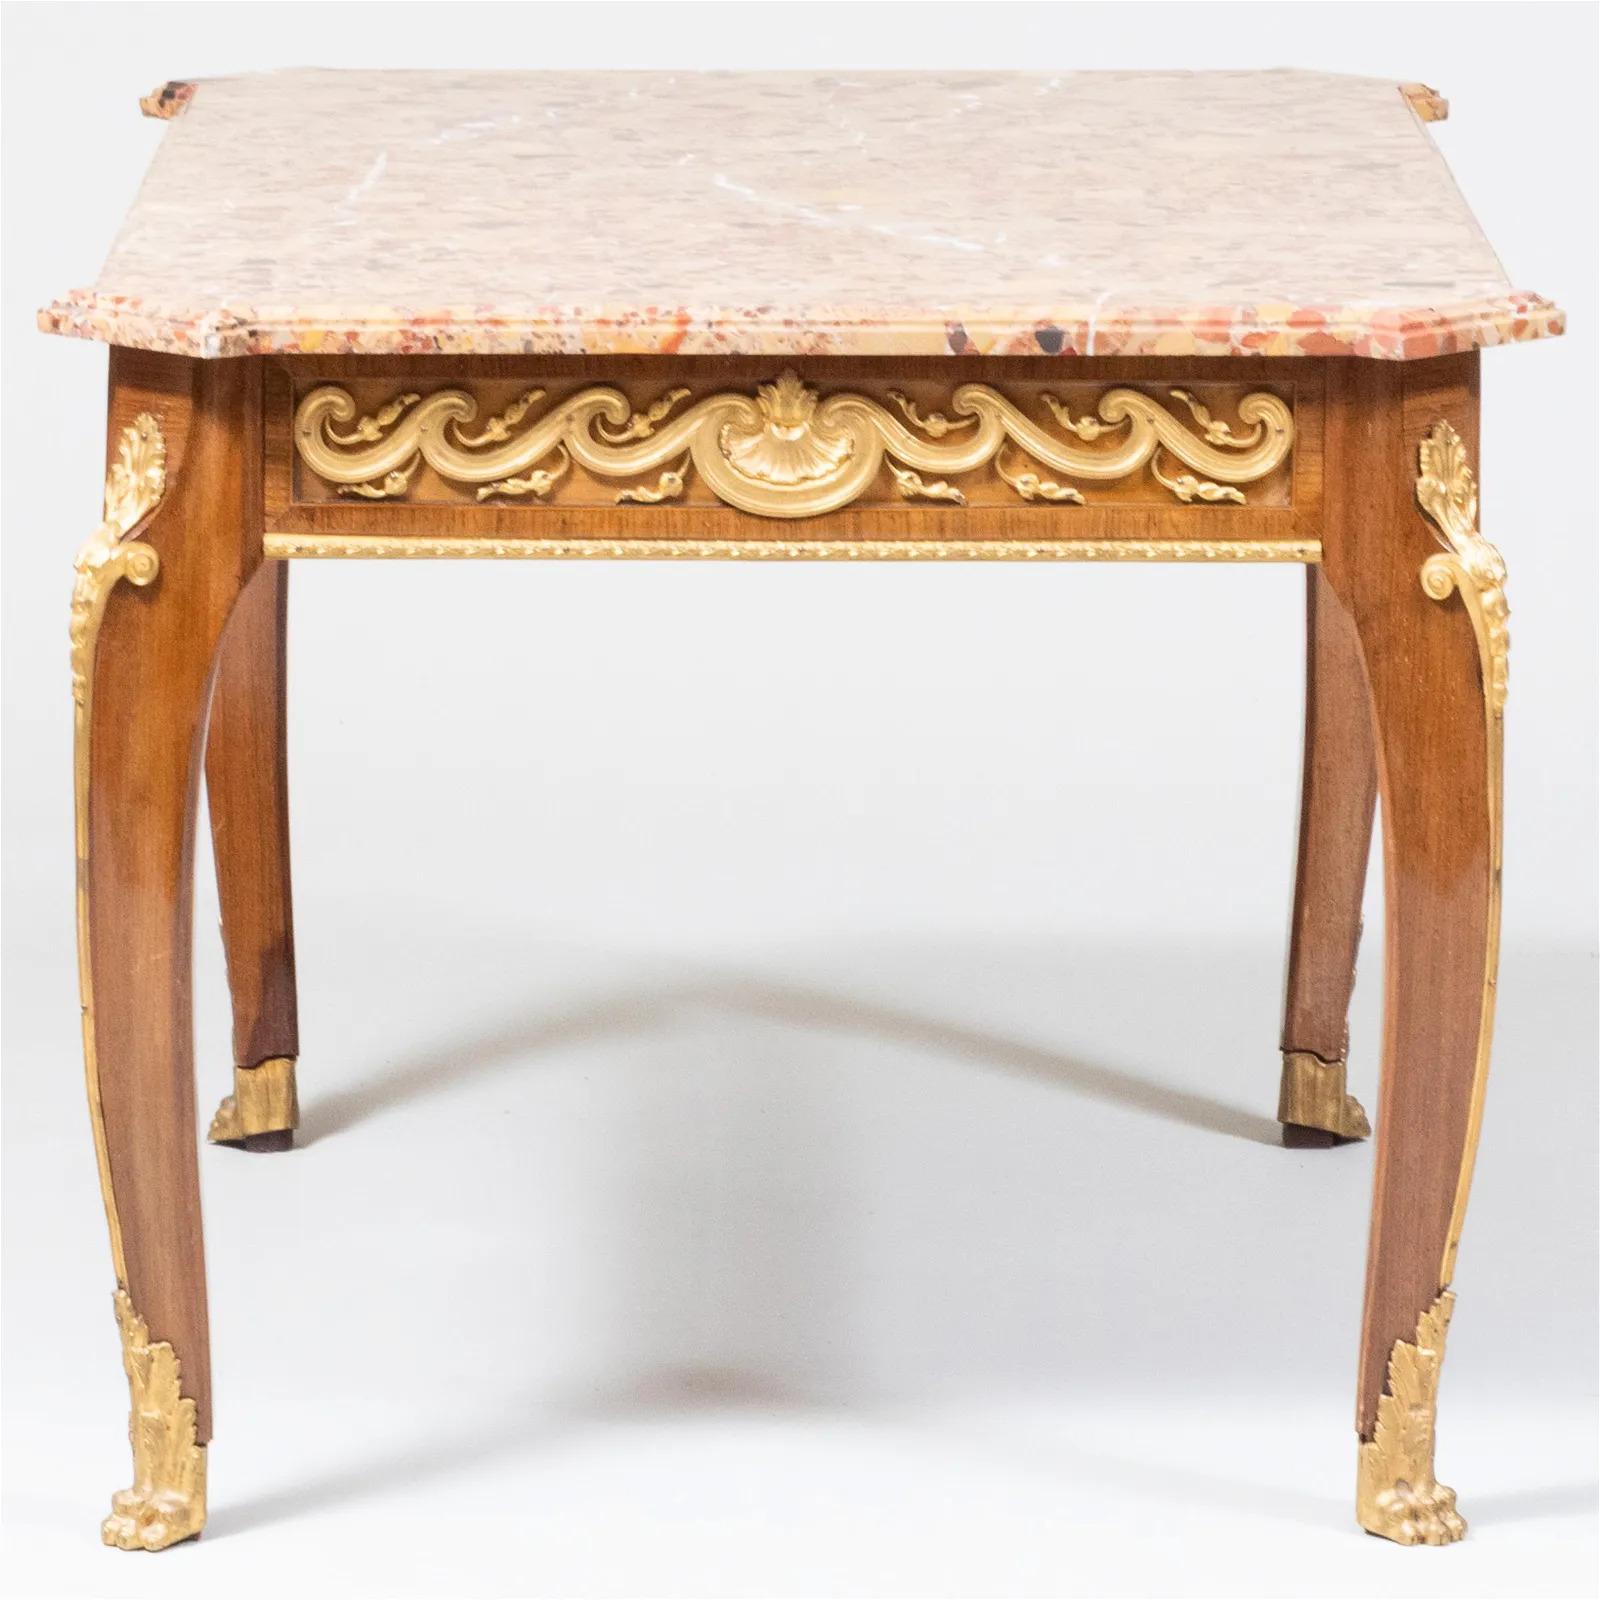 Napoleon III French Louis XVI Style Ormolu-Mounted Mahogany Coffee Table, C. 1880 For Sale